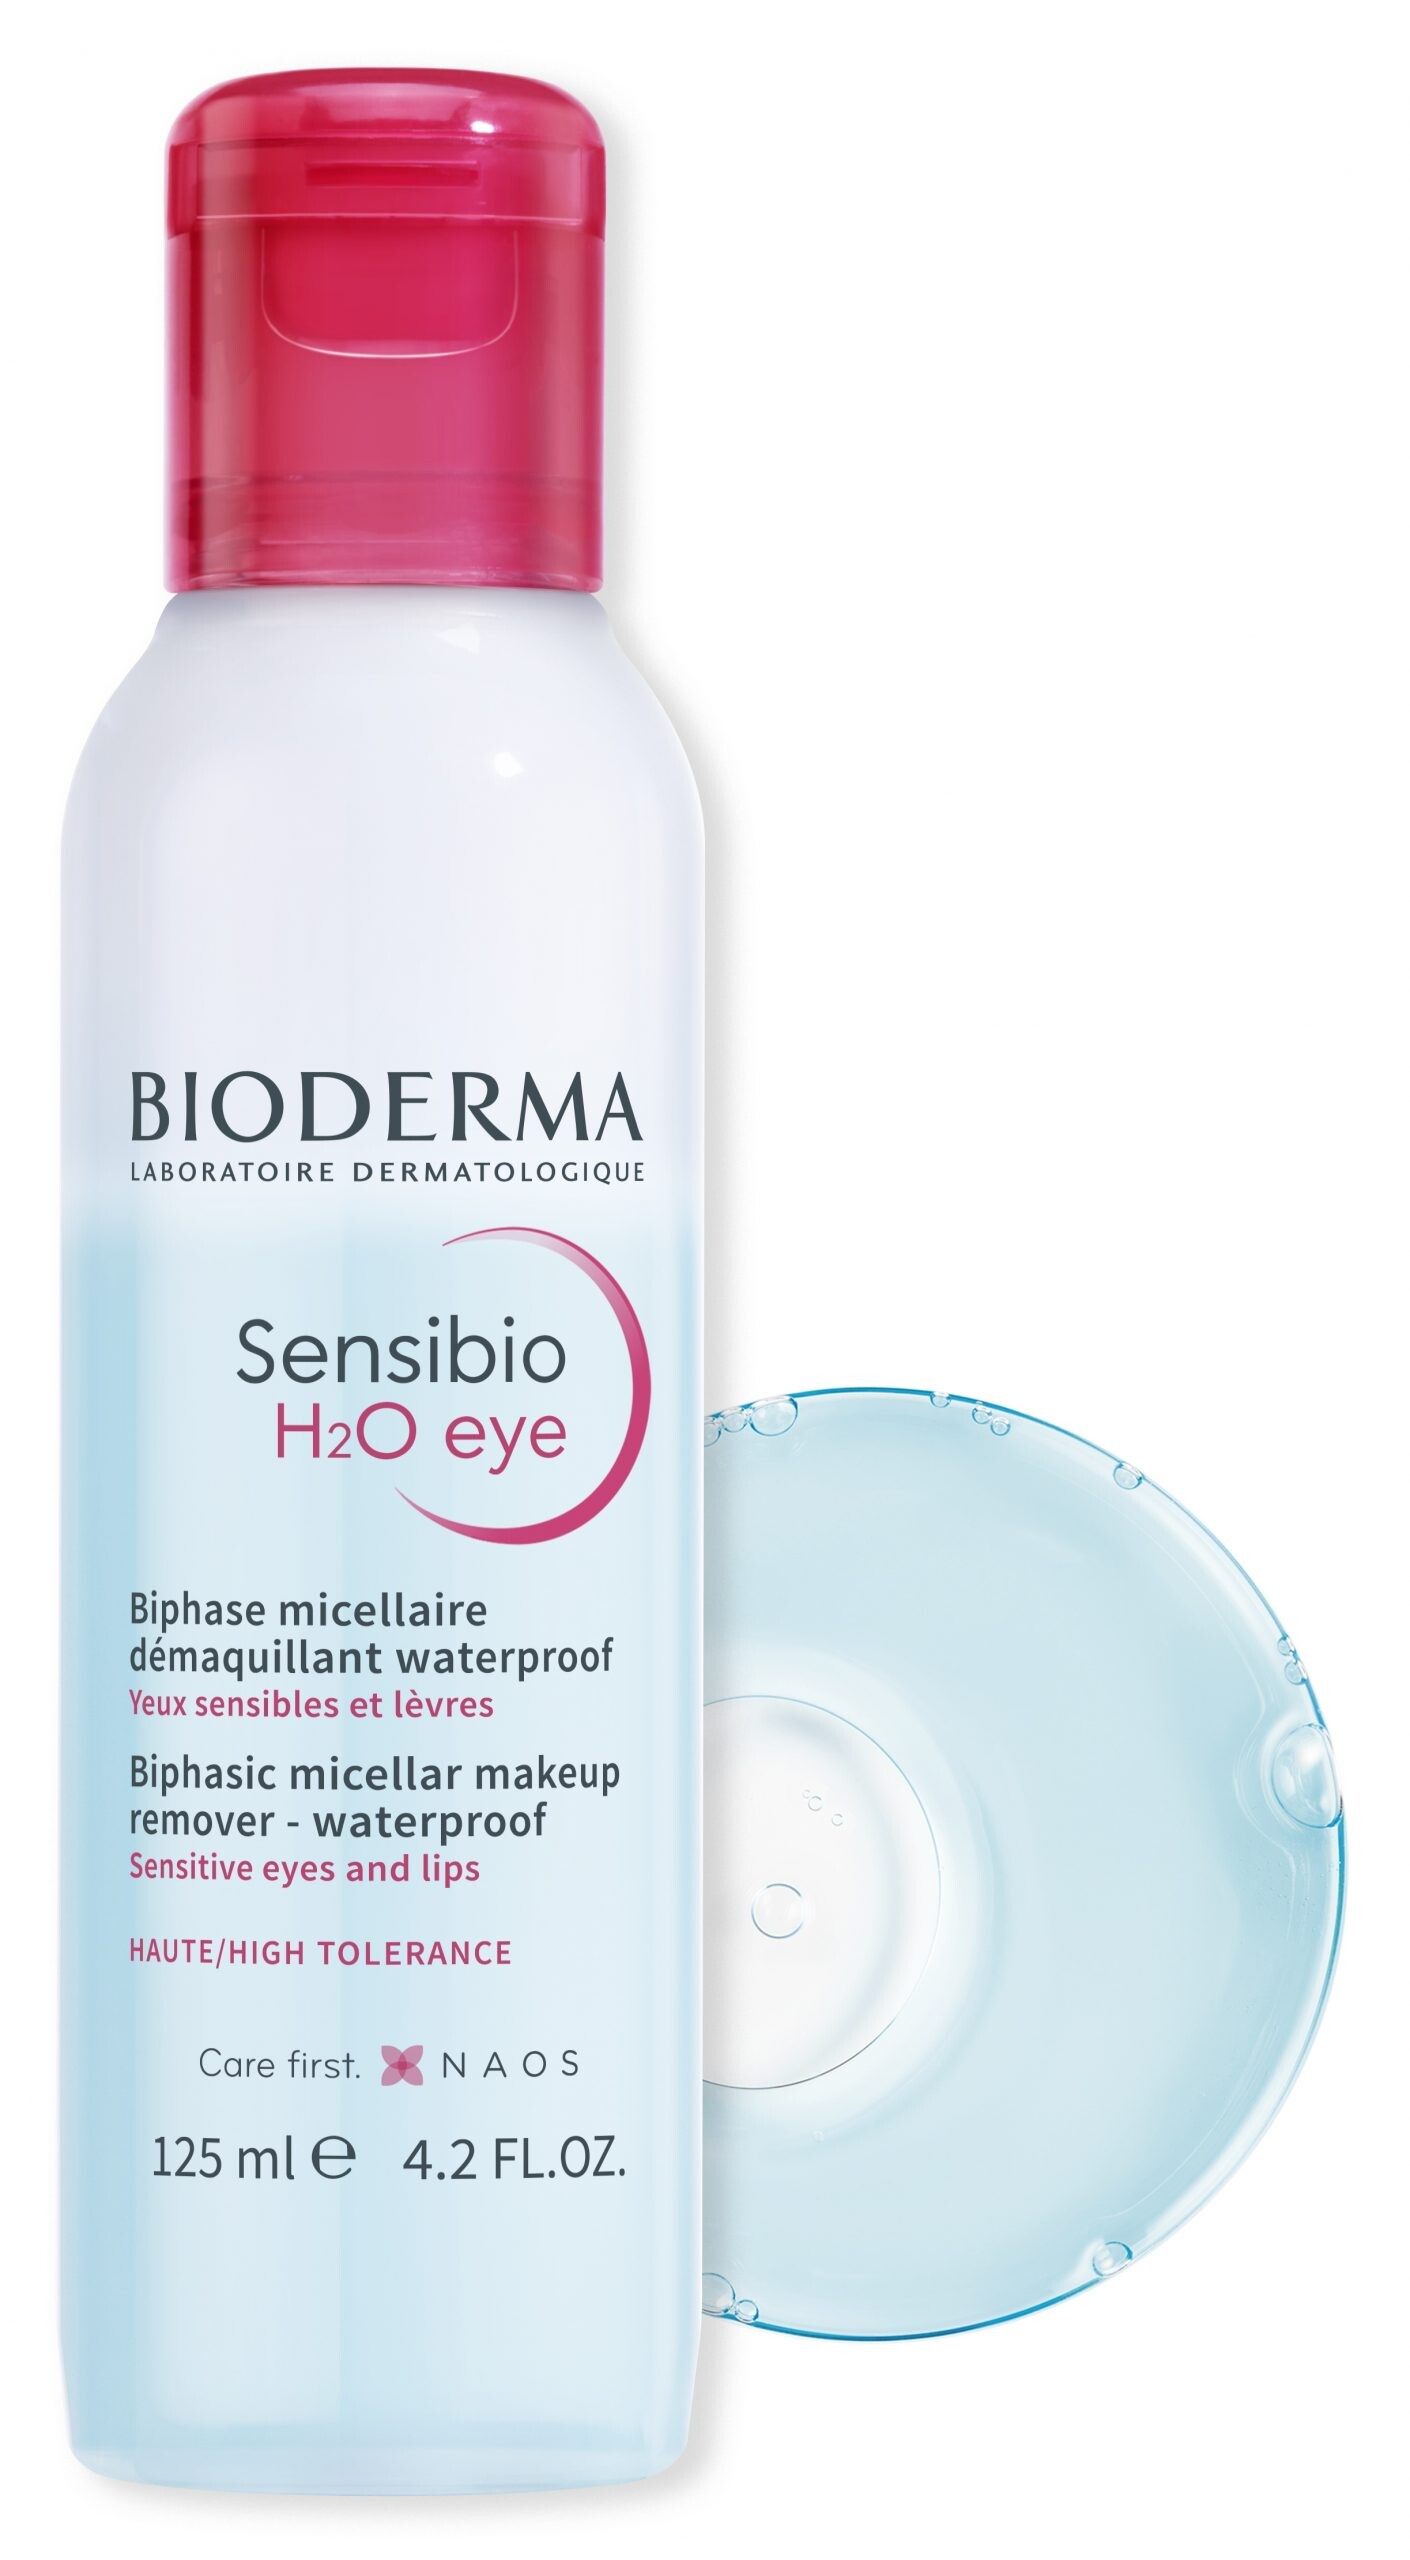 BIODERMA Sensibio H2O eye ใหม่! ผลิตภัณฑ์ทำความสะอาดผิวรอบดวงตาและริมฝีปาก ลบง่าย หมดจด ไม่แสบ พร้อมบำรุงขนตา เวชสำอางสำหรับผิวบอบบางแพ้ง่าย